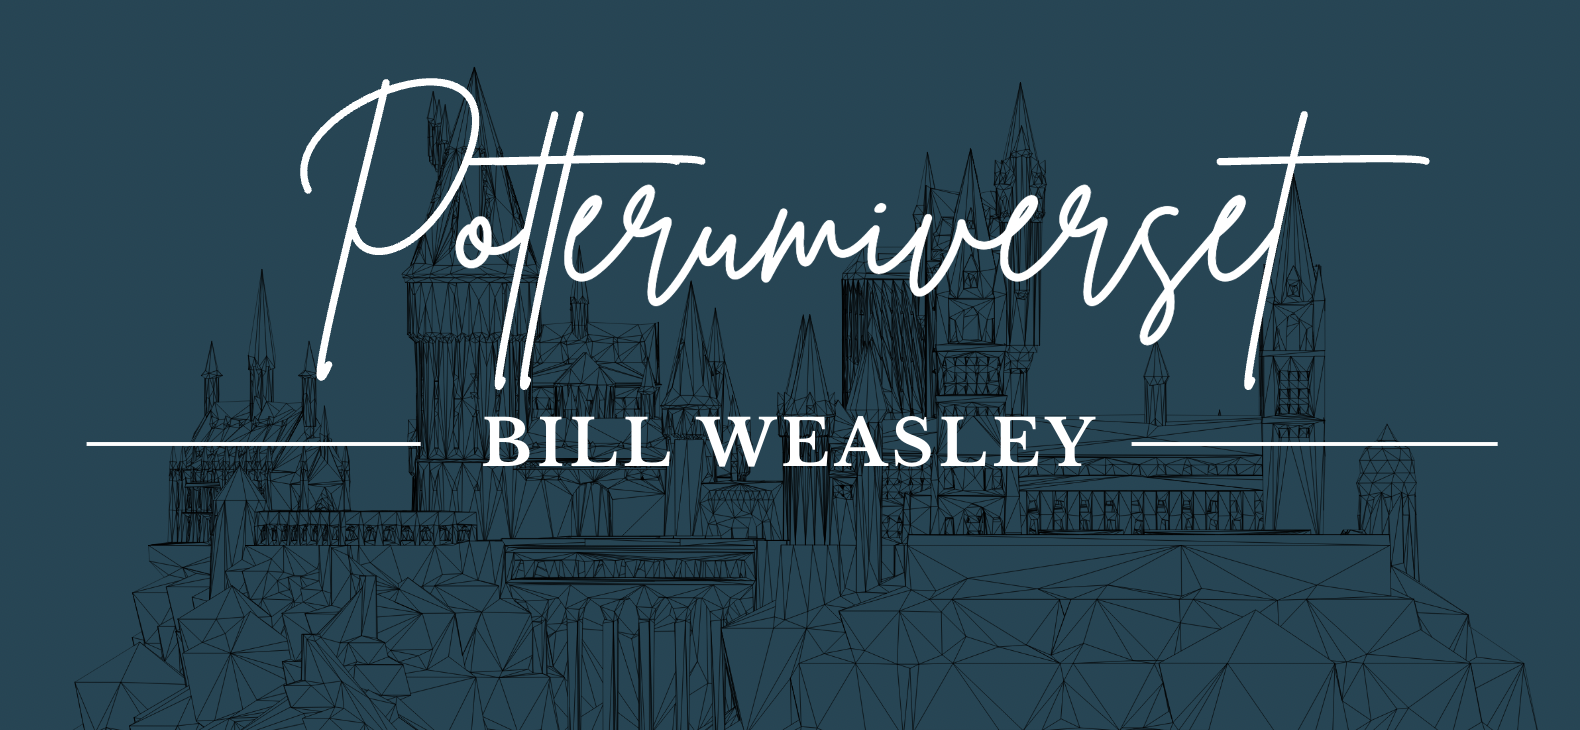 Potteruniverset: Bill Weasley fra Harry Potter